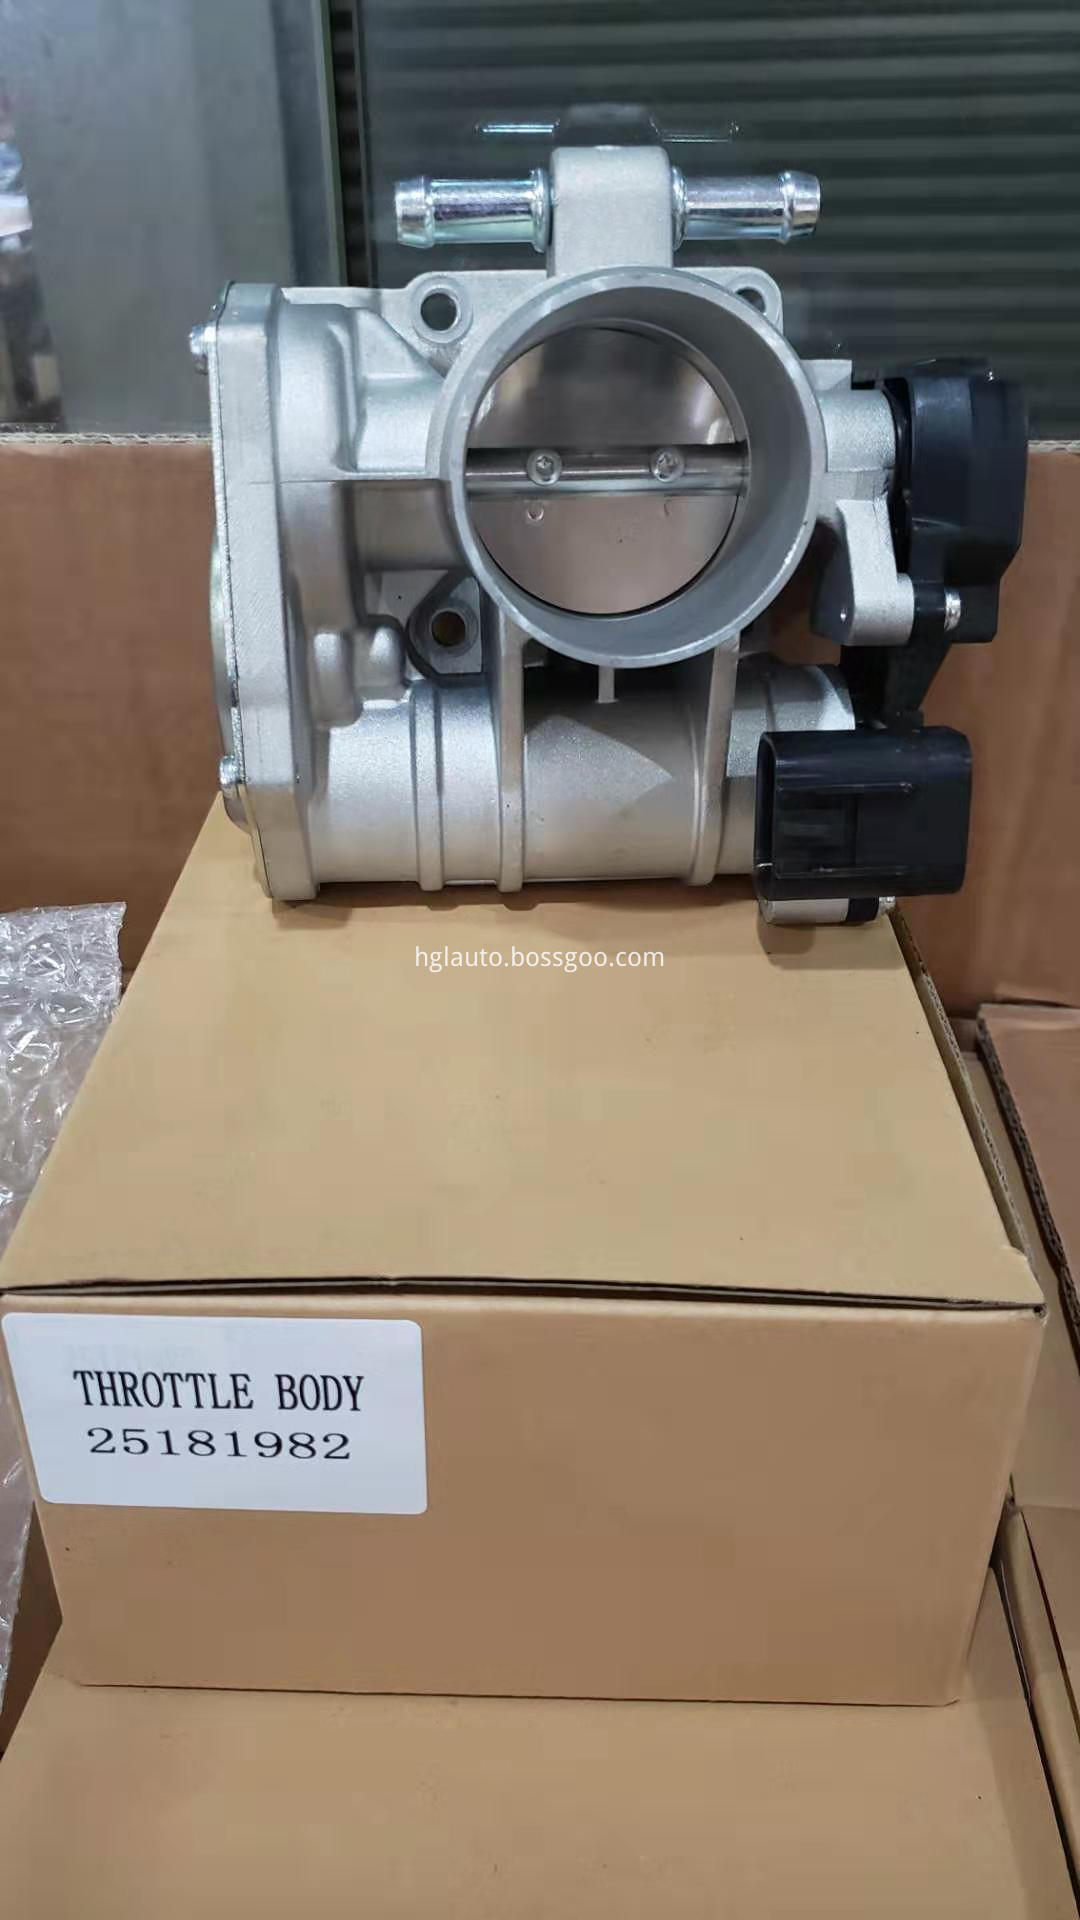 HGL-TRB-004 throttle body 25181982